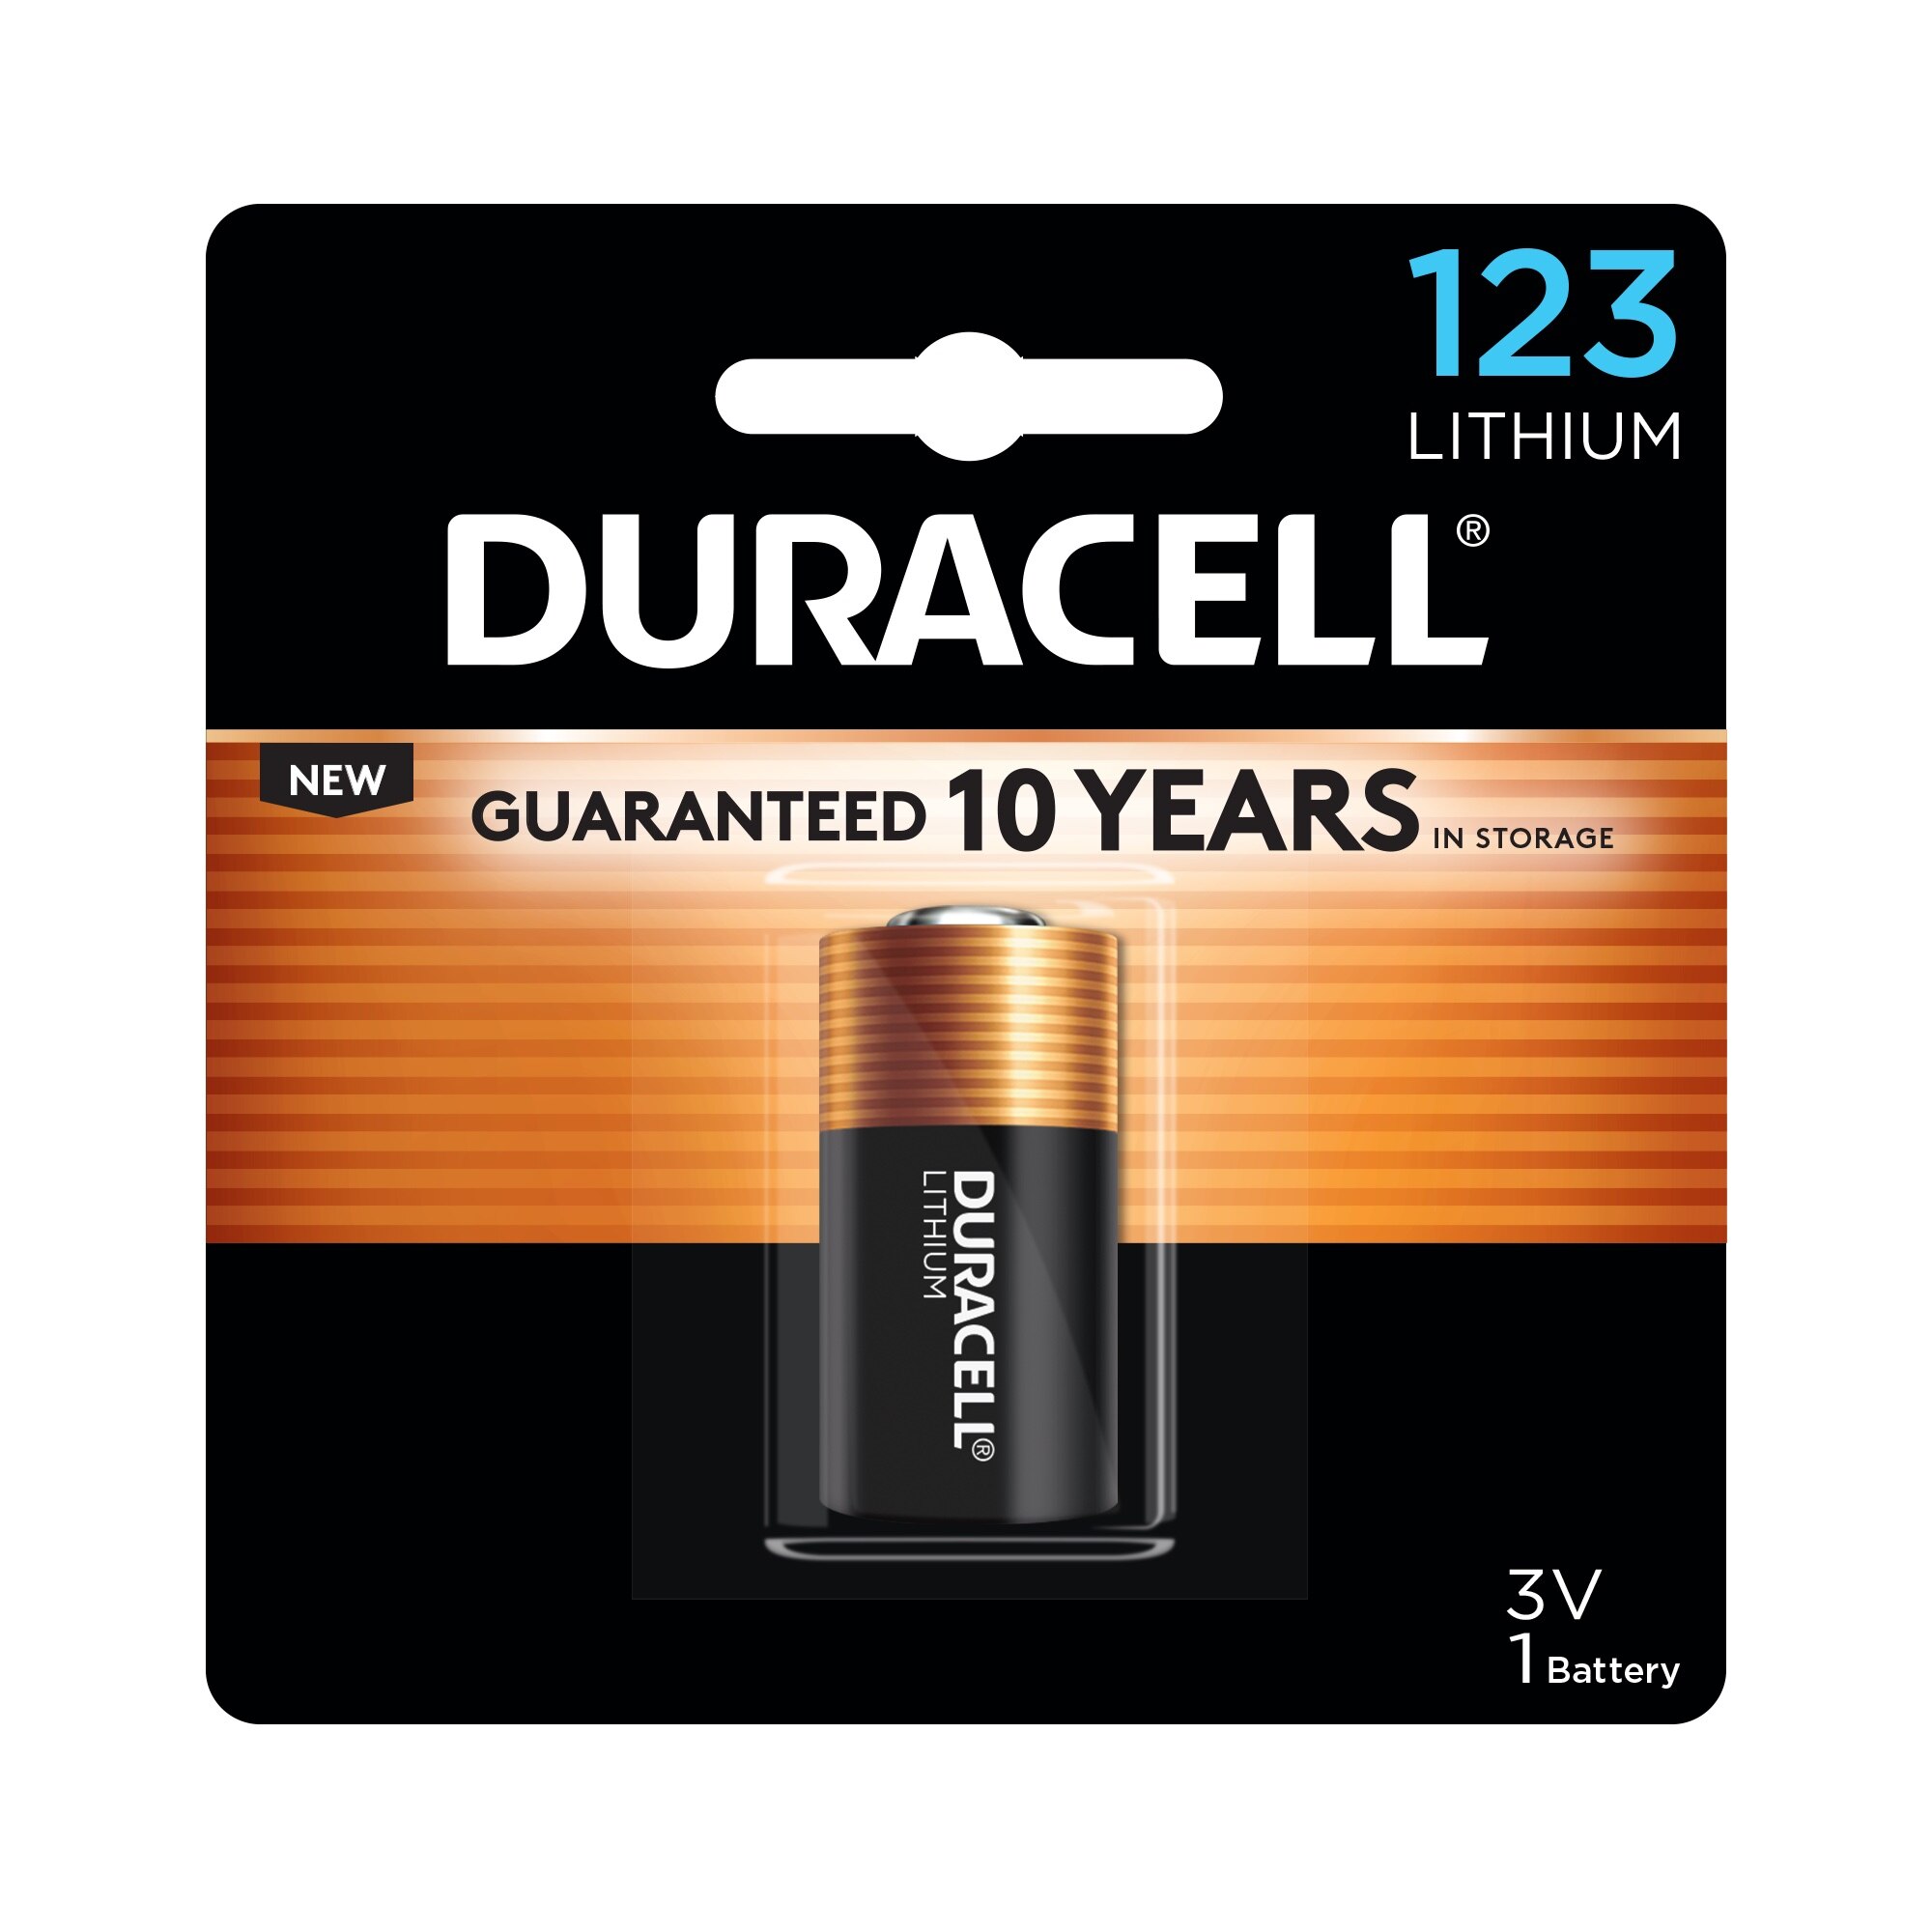 Duracell 123 3V Lithium Batteries